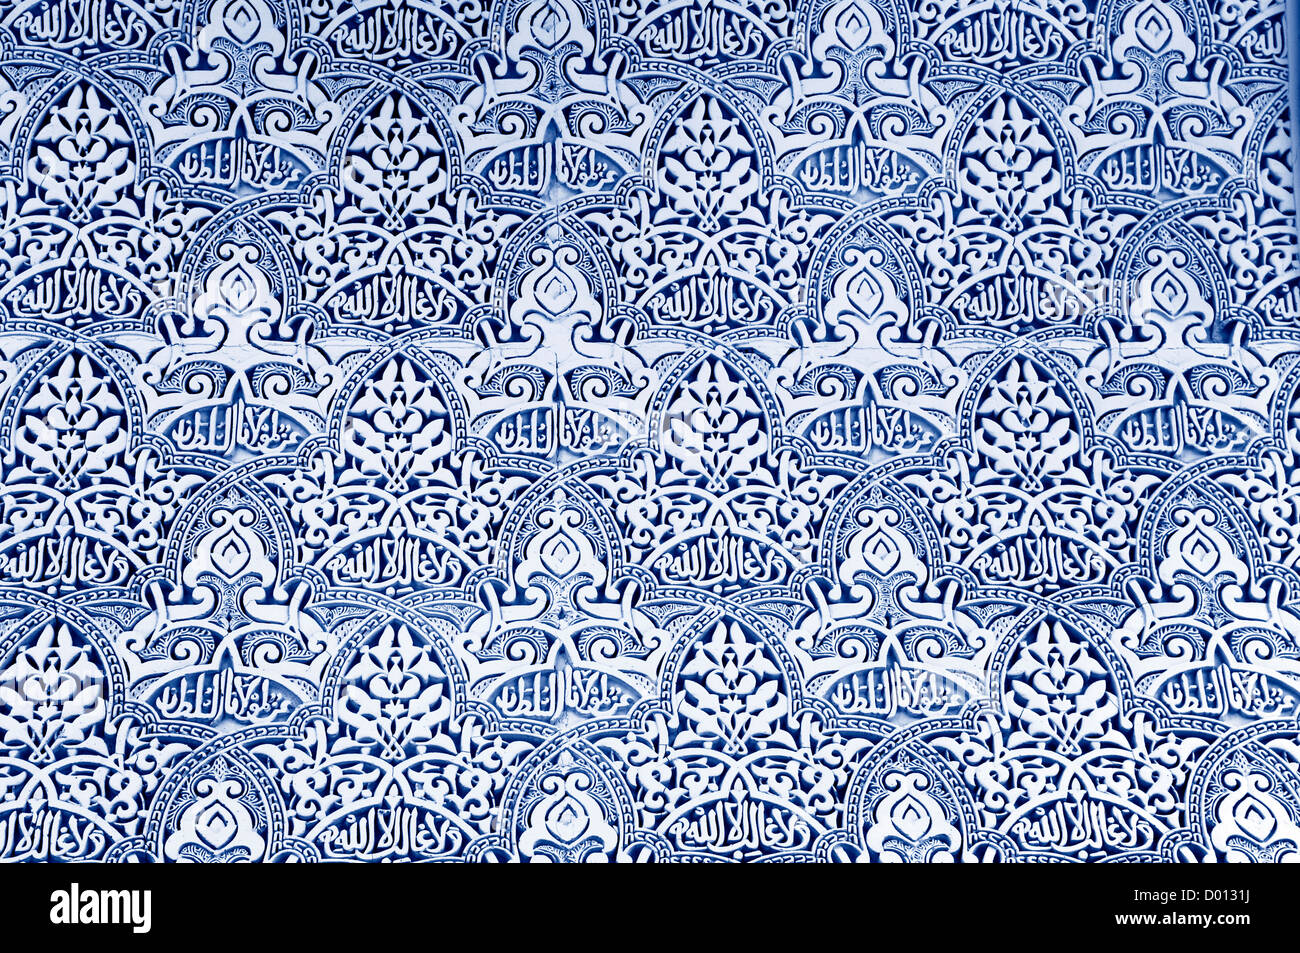 Islamic pattern design Stock Photo